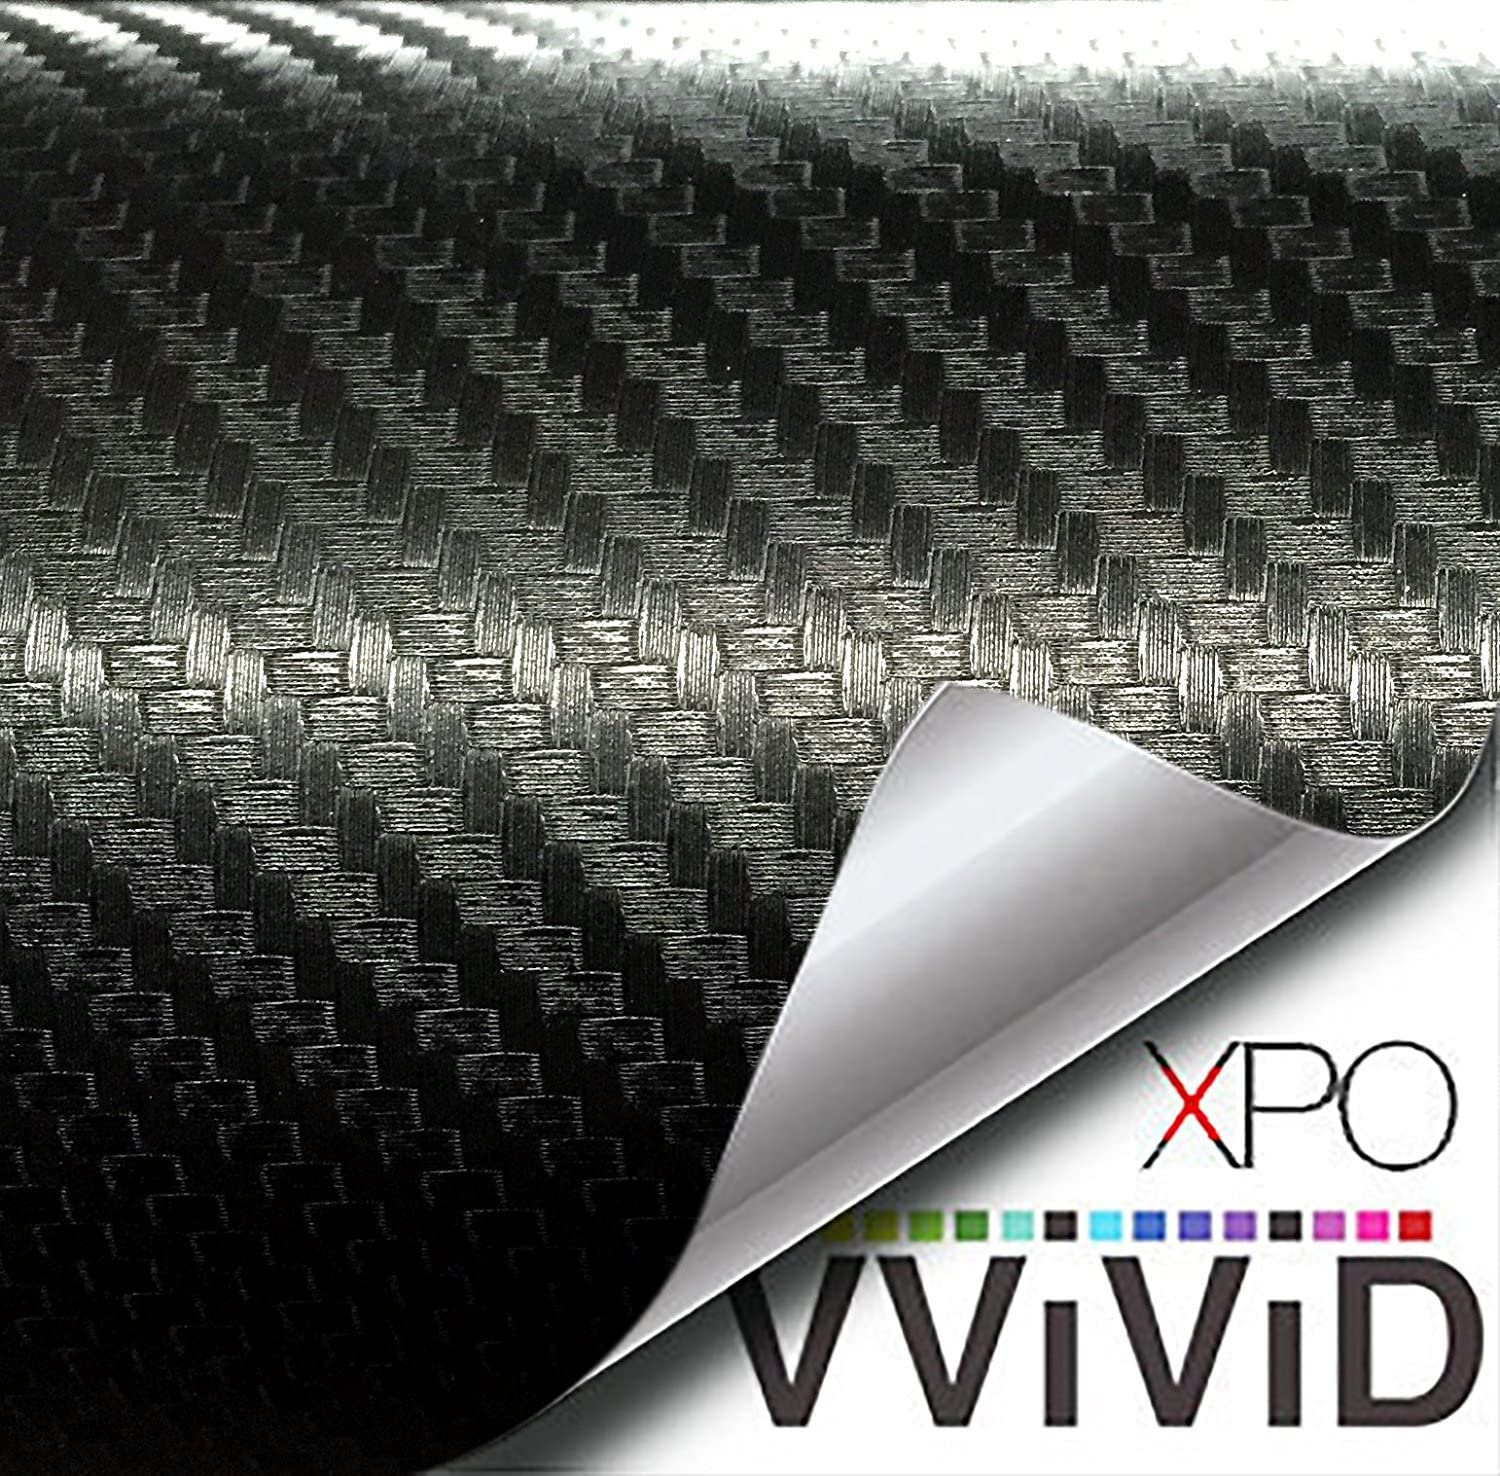 VViViD Gloss Black Vinyl Wrap Adhesive Film Air Release Decal Sheet (1ft x  5ft)